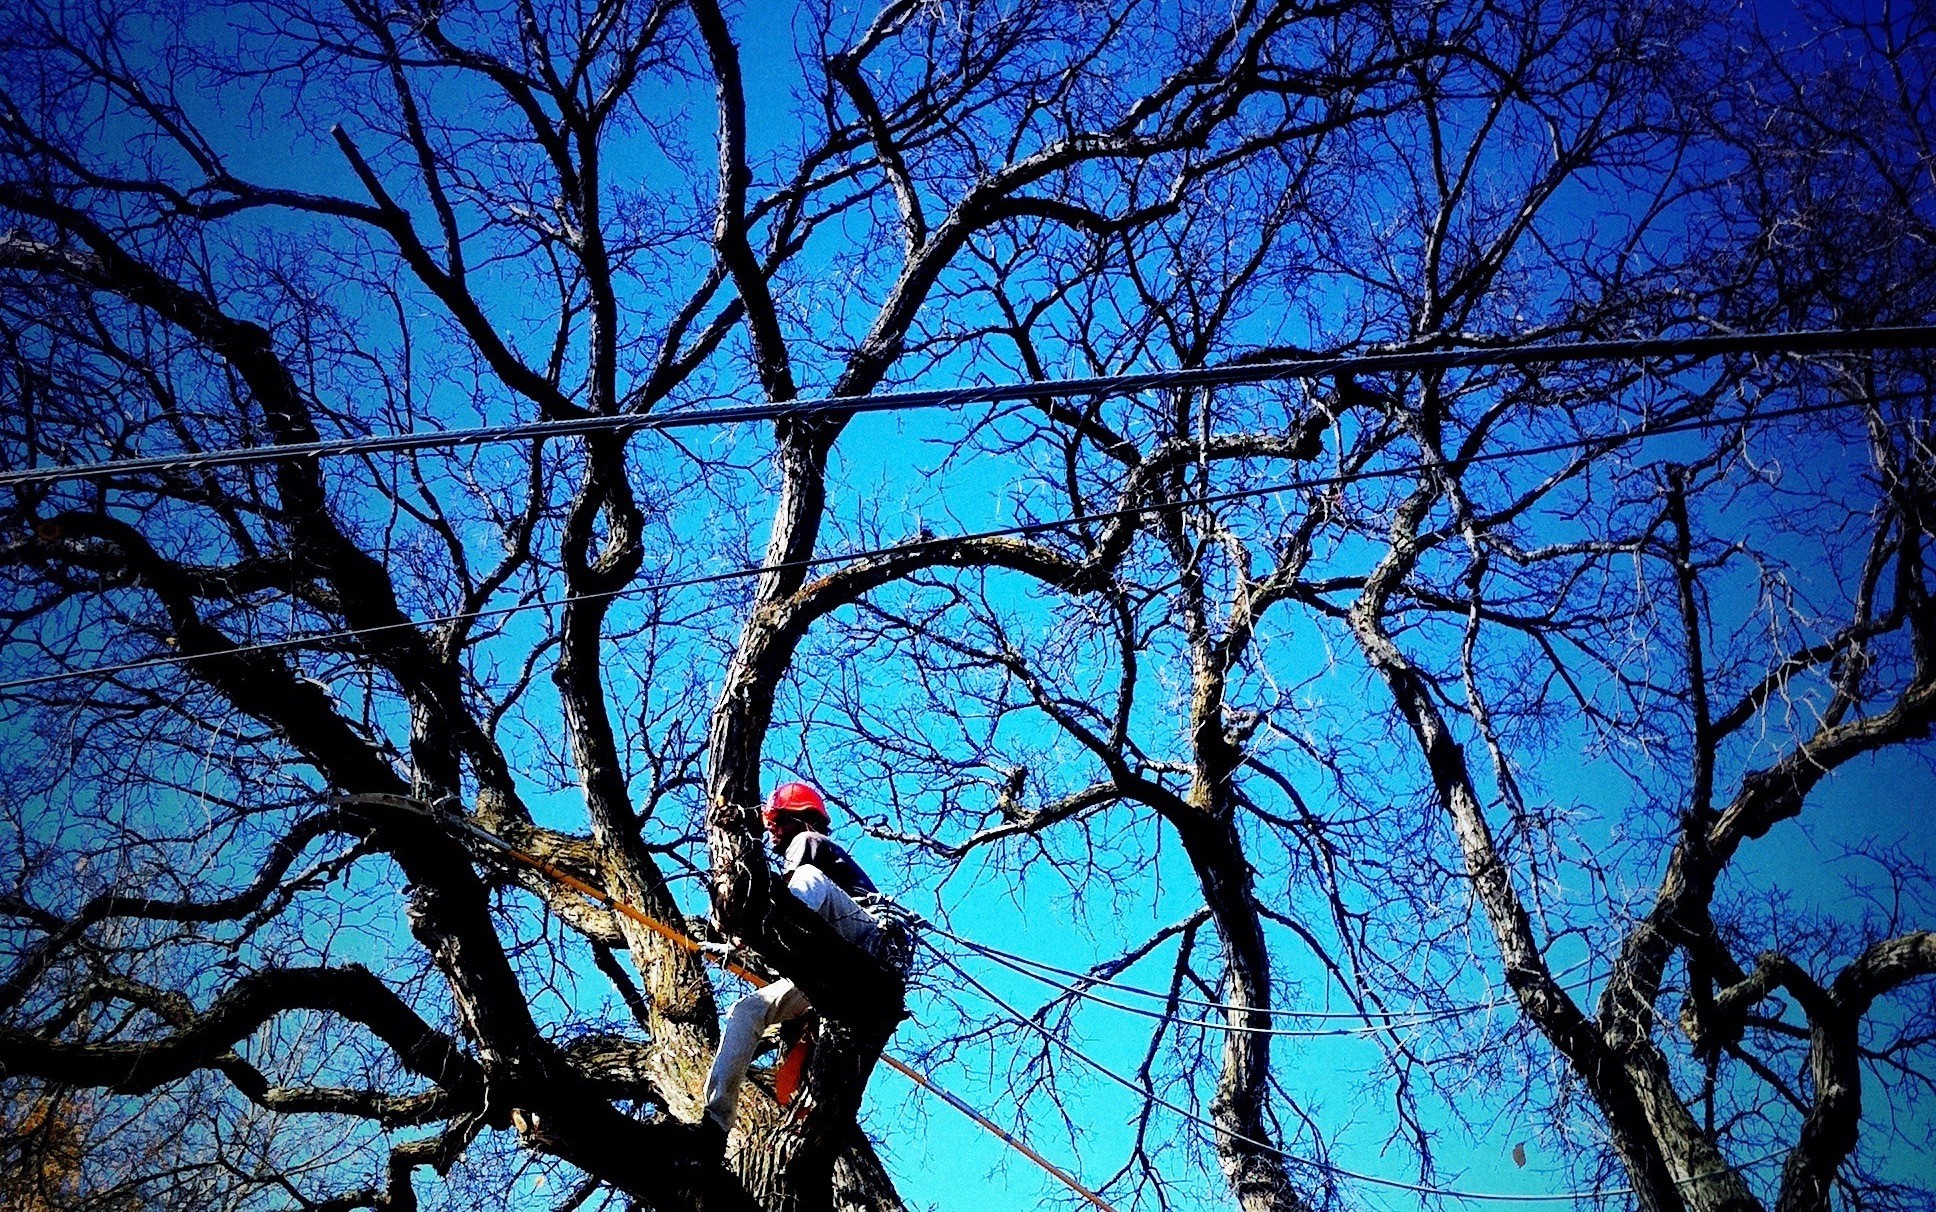 2020 tree maintenance | anasararojas via Foter.com  -  CC BY-SA